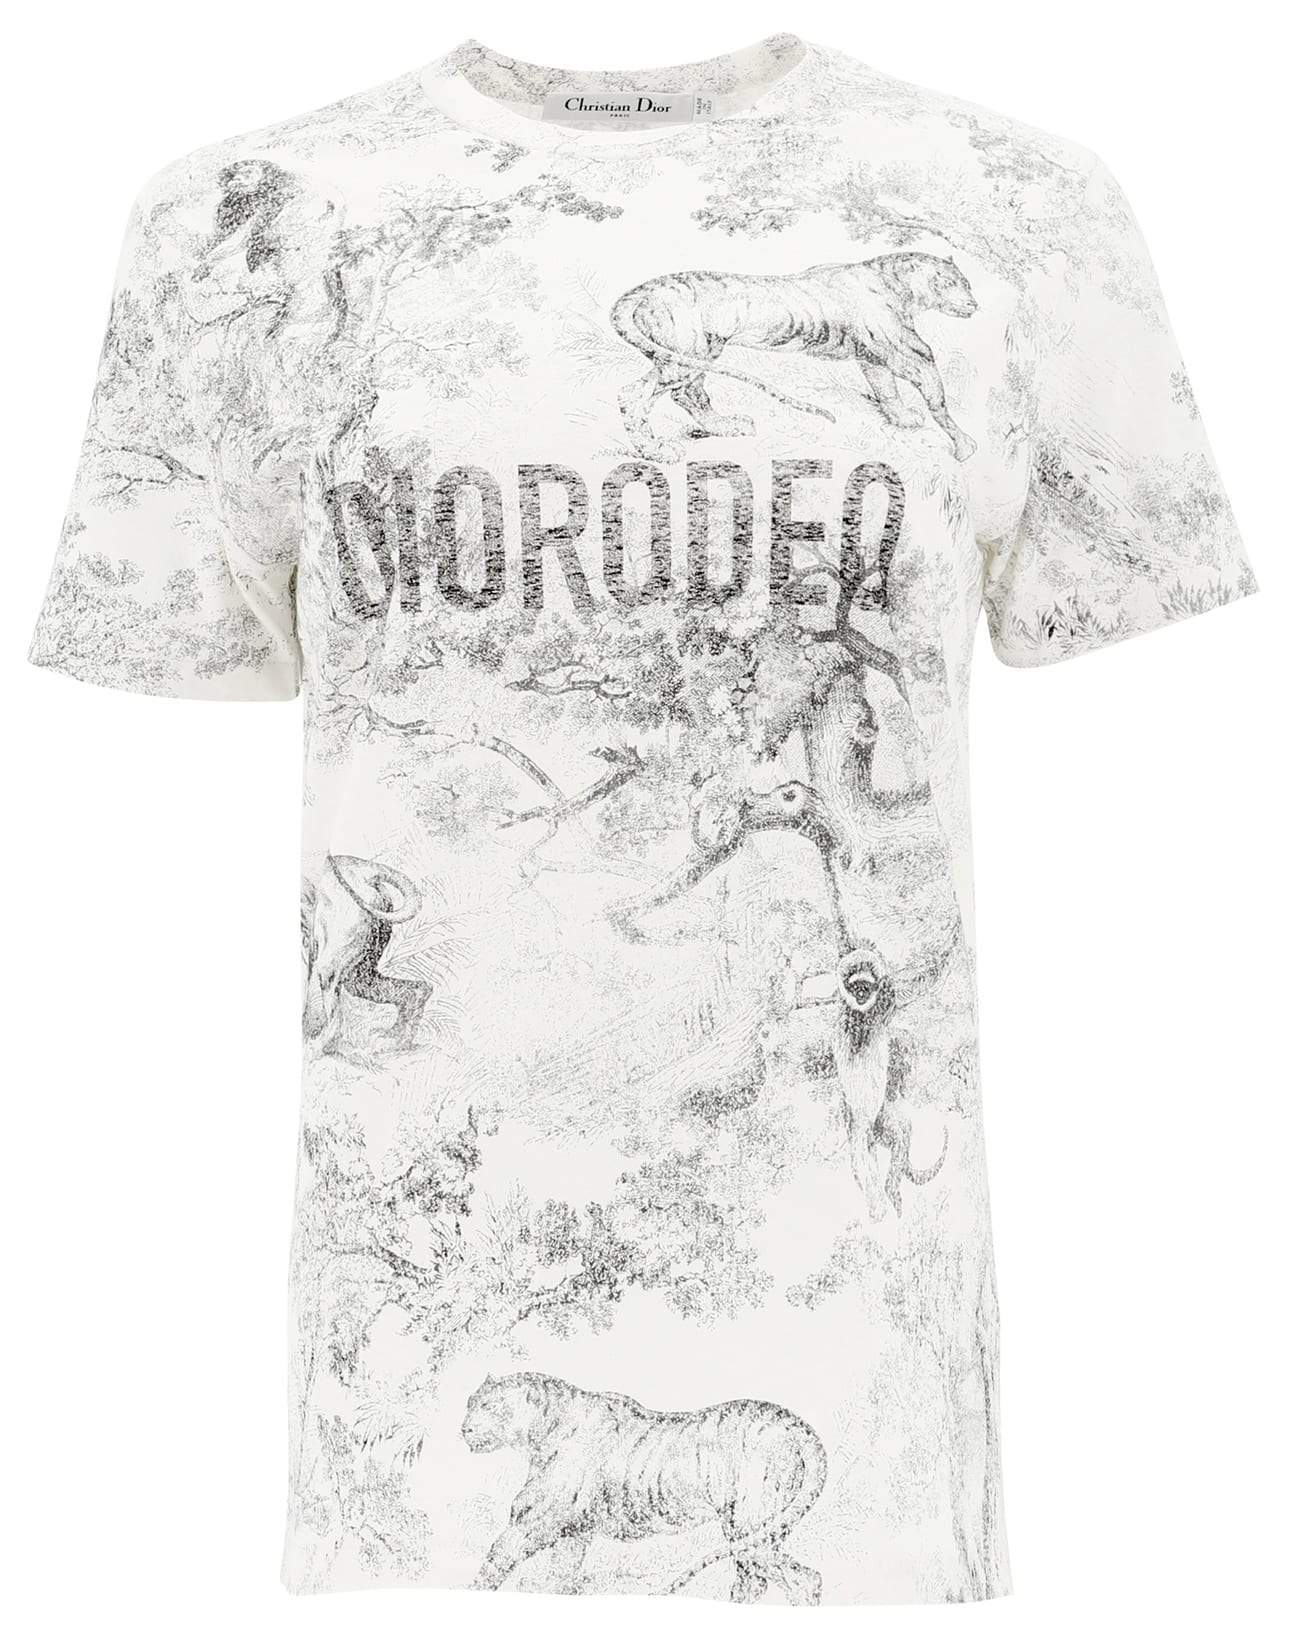 diorodeo t shirt price, OFF 78%,Buy!